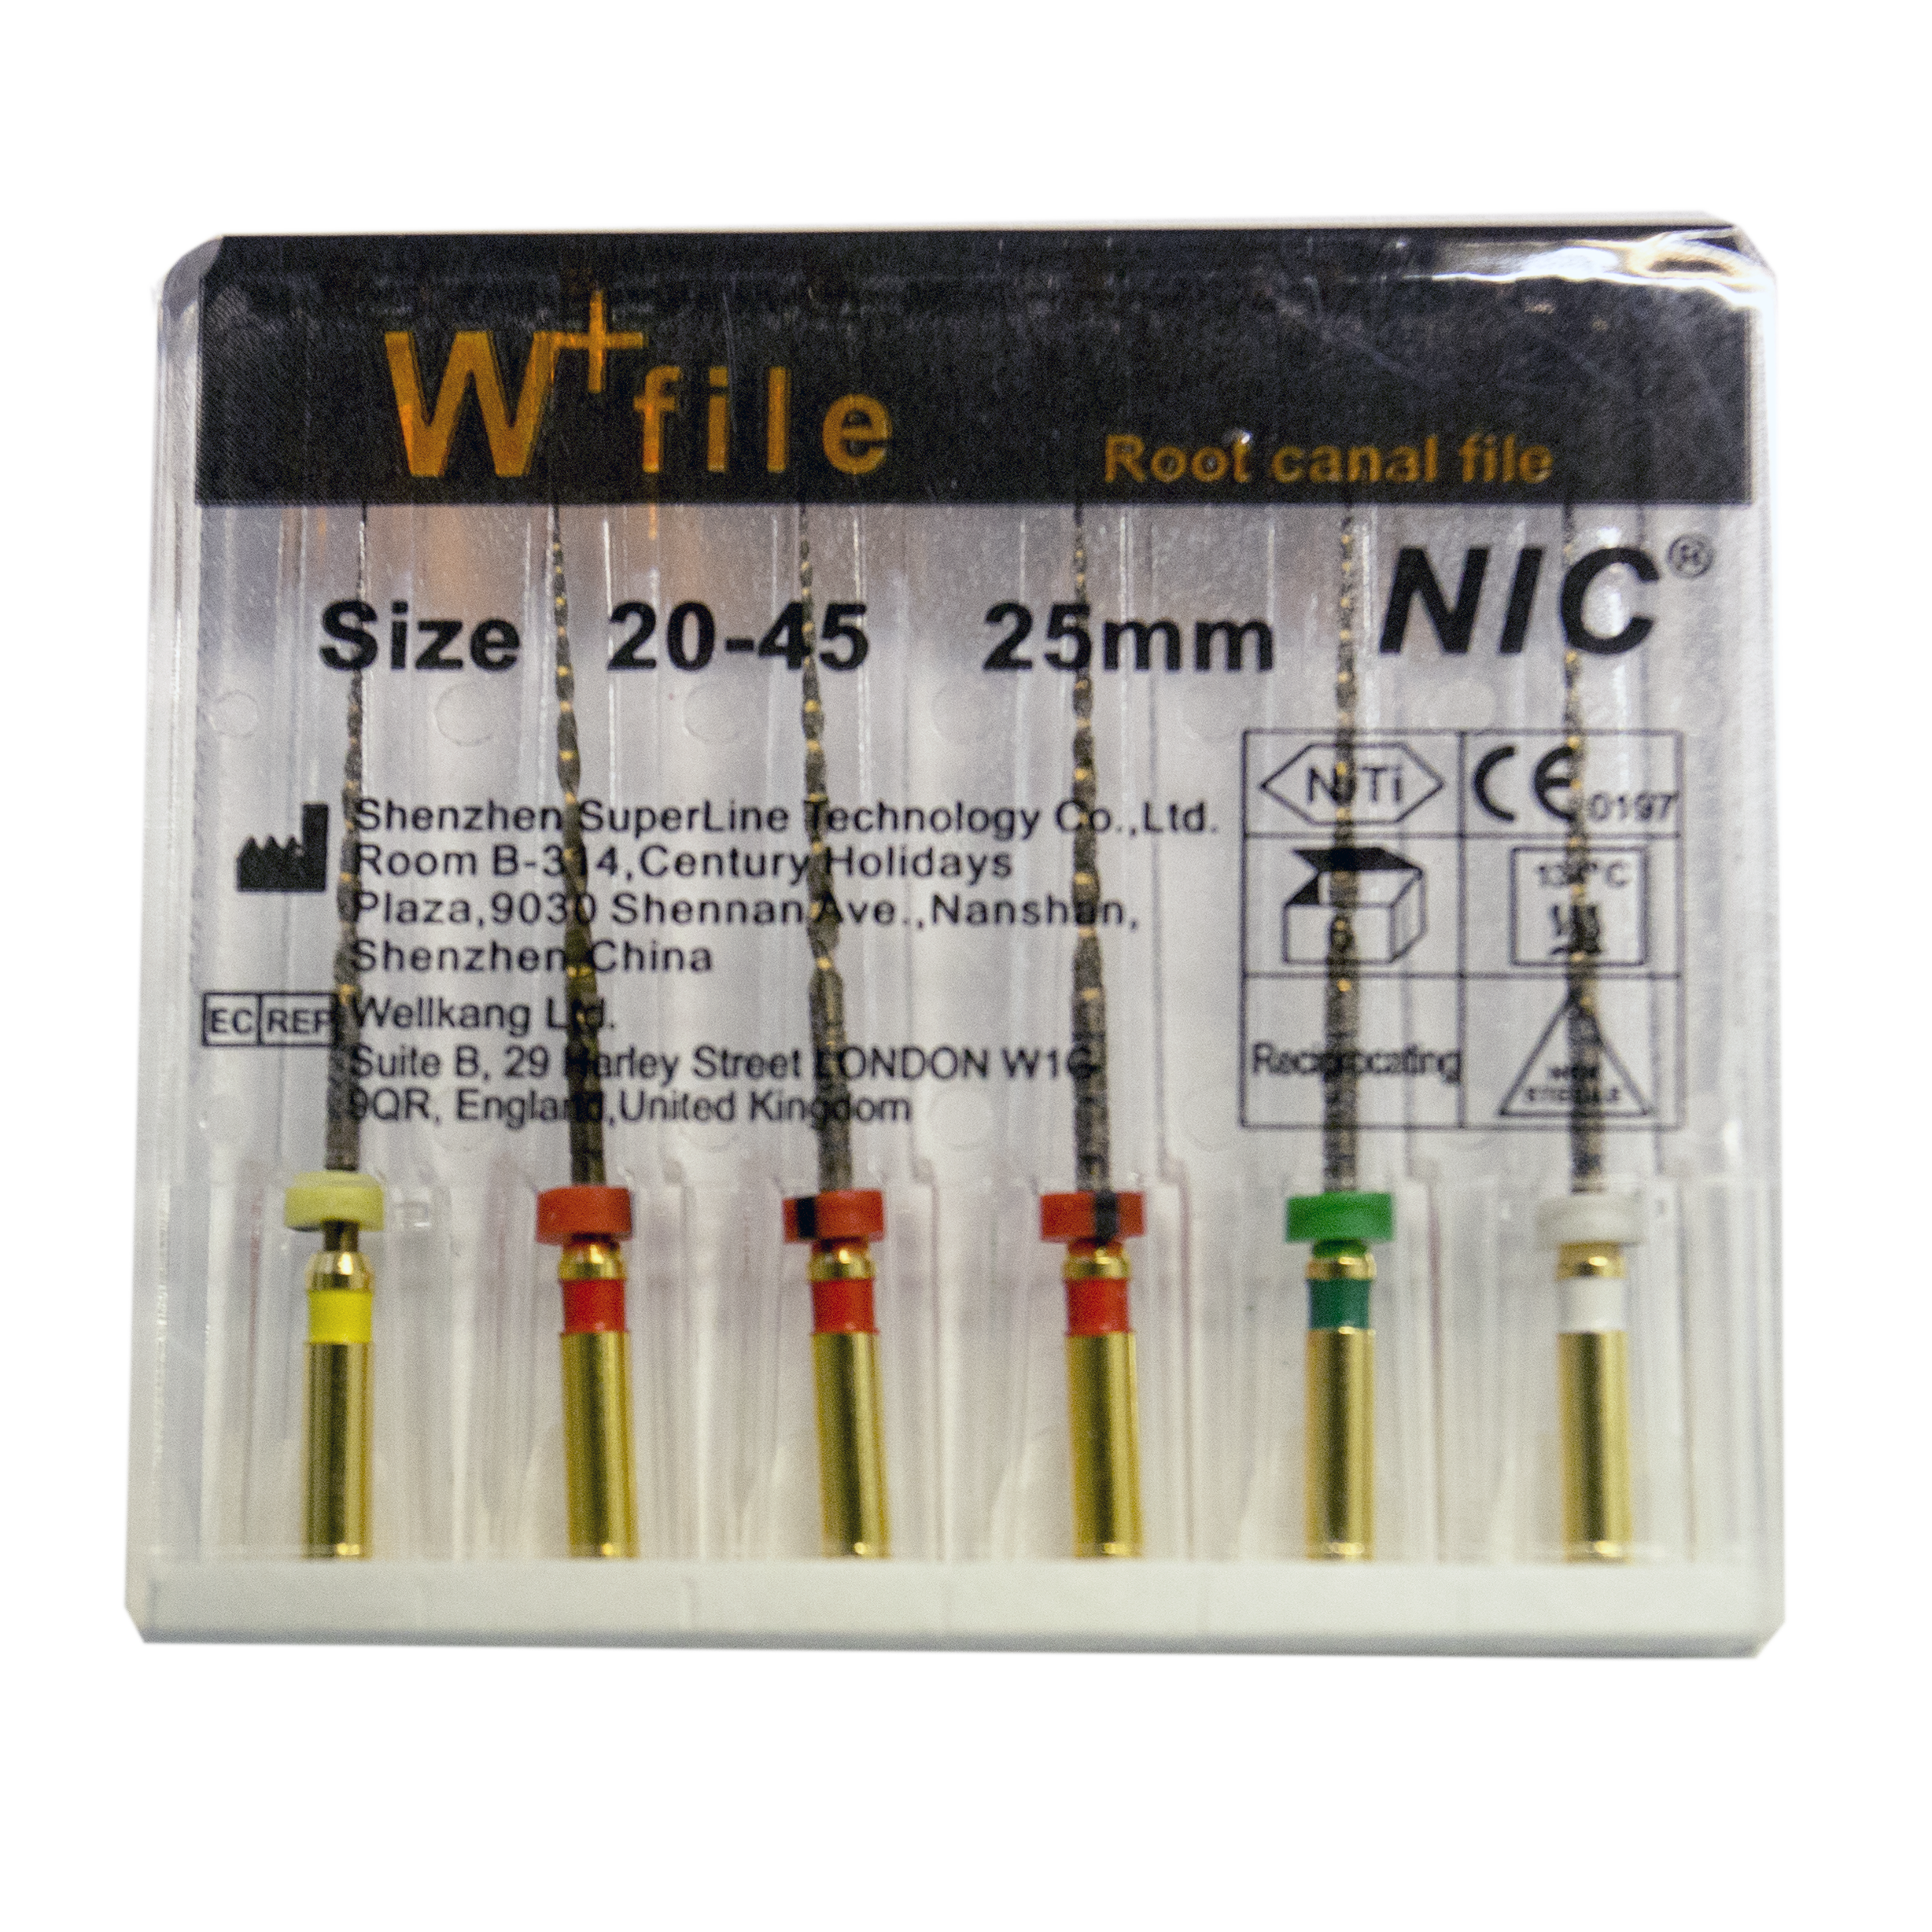 W+file (Waveone gold) 25 mm, 6 db gépi tű, M-wire NiTi - több méretben